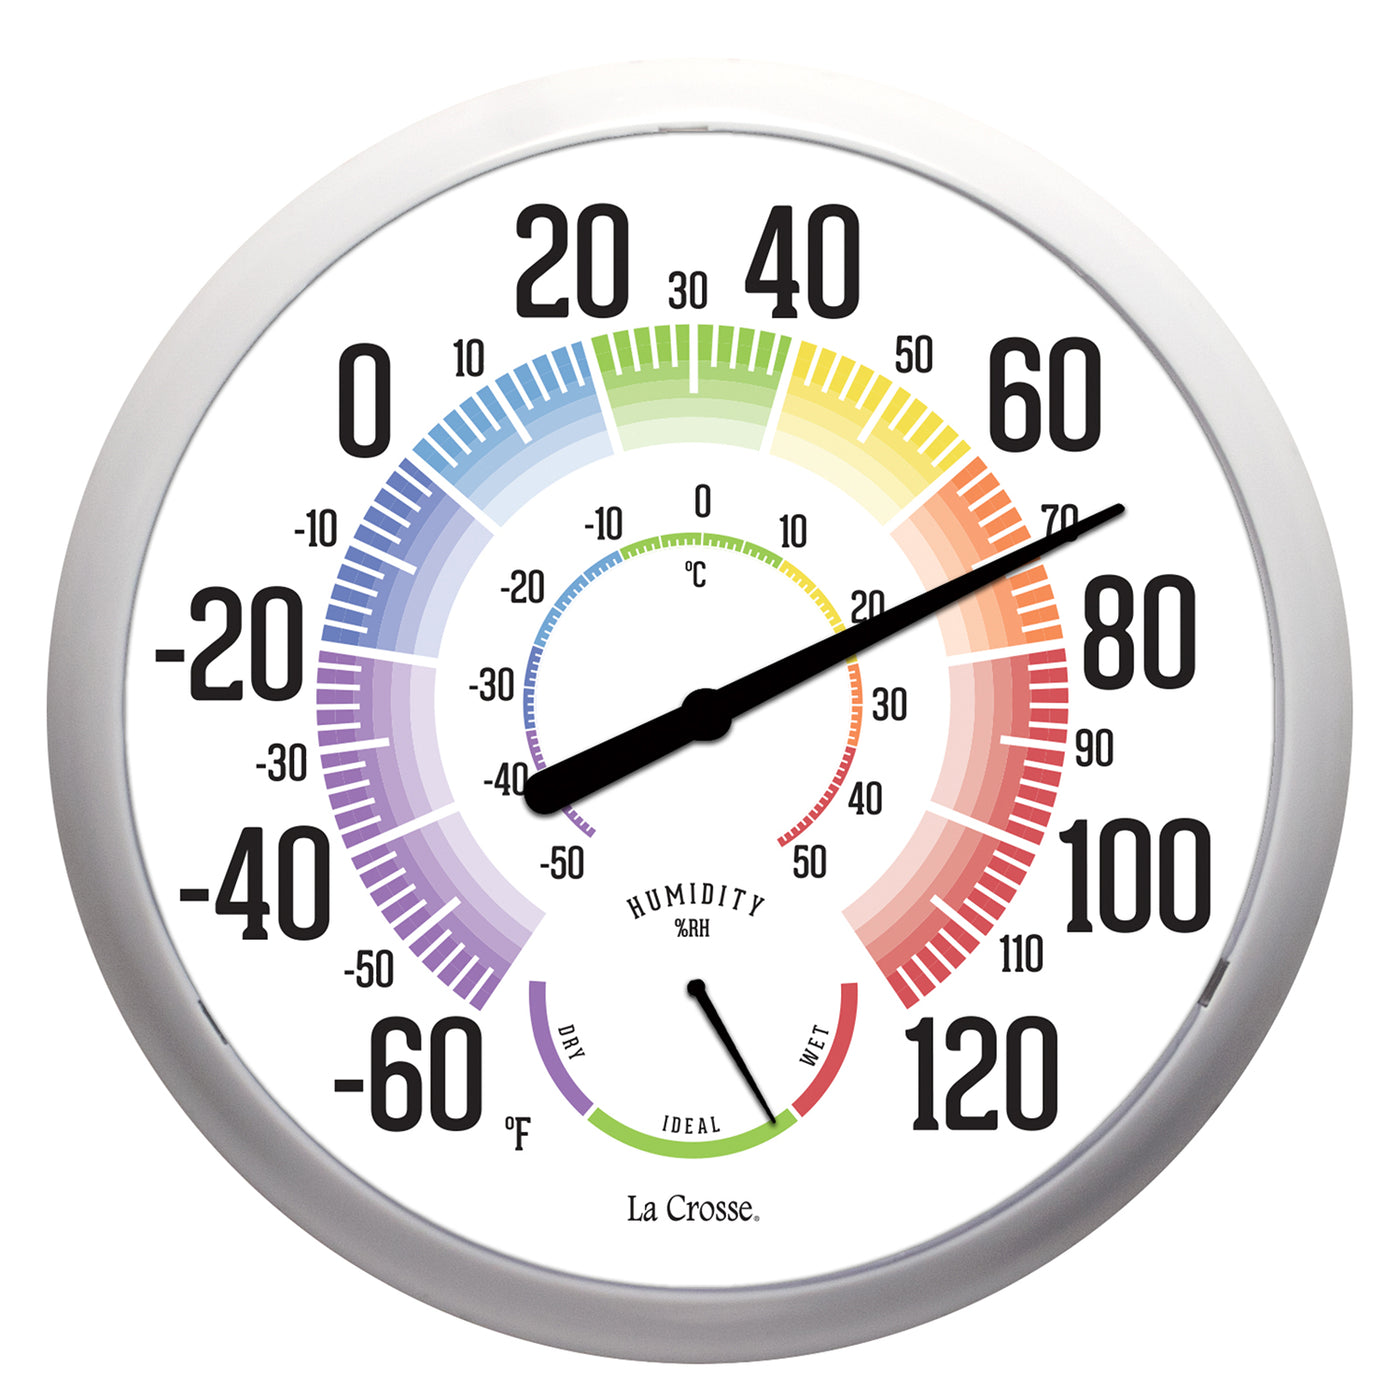 La Crosse Technology Galvanized Metal Thermometer